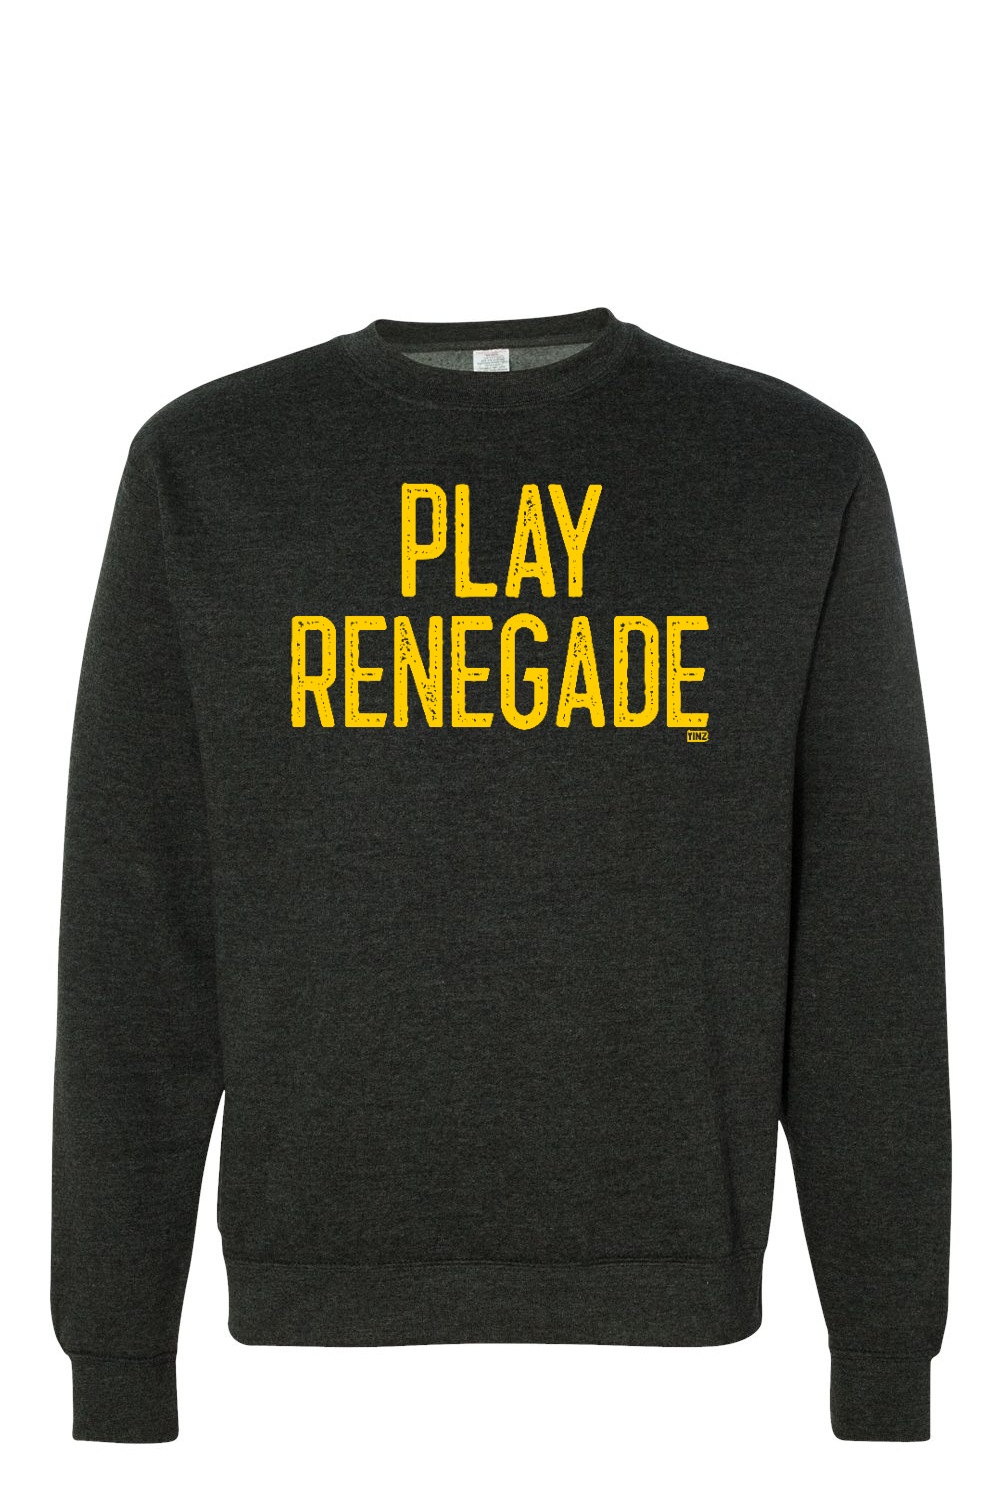 Play Renegade - Premium Crewneck Sweatshirt - Yinzylvania